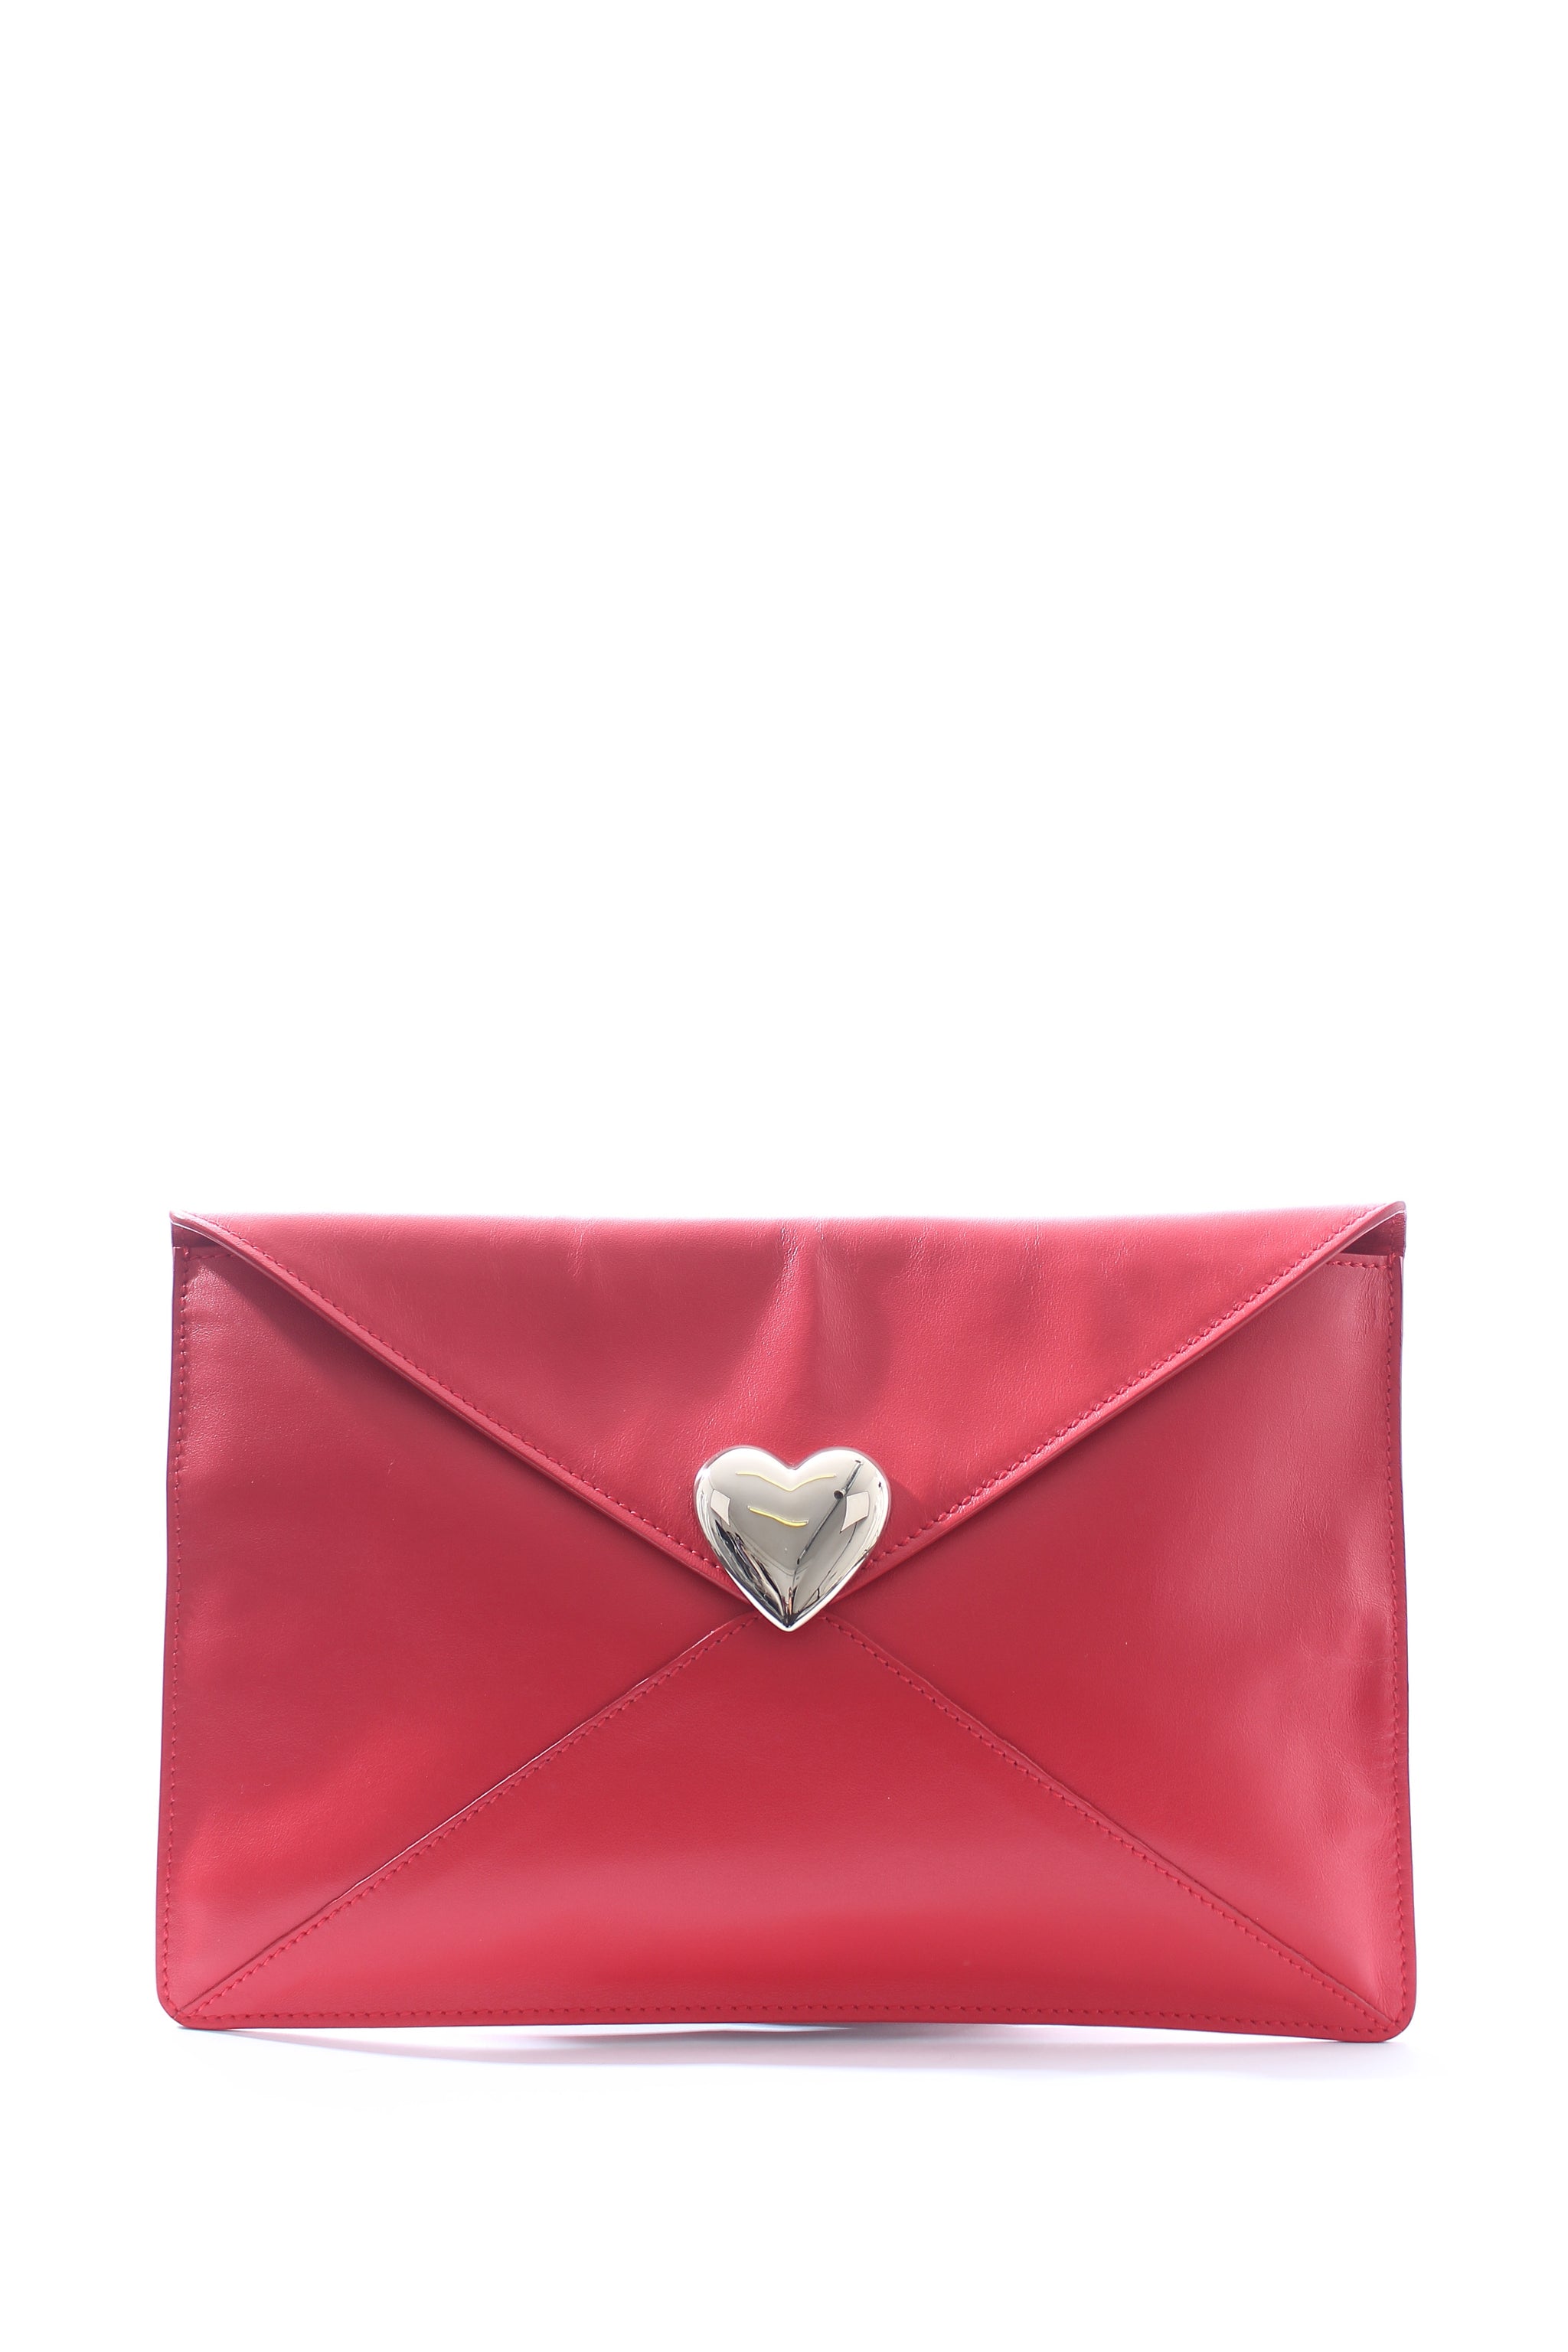 Vintage Valentino Garavani Red Leather Chain Shoulder Bag With Rose Flower  Embossed Design and Round V Motif. Can Be Clutch Bag. - Etsy